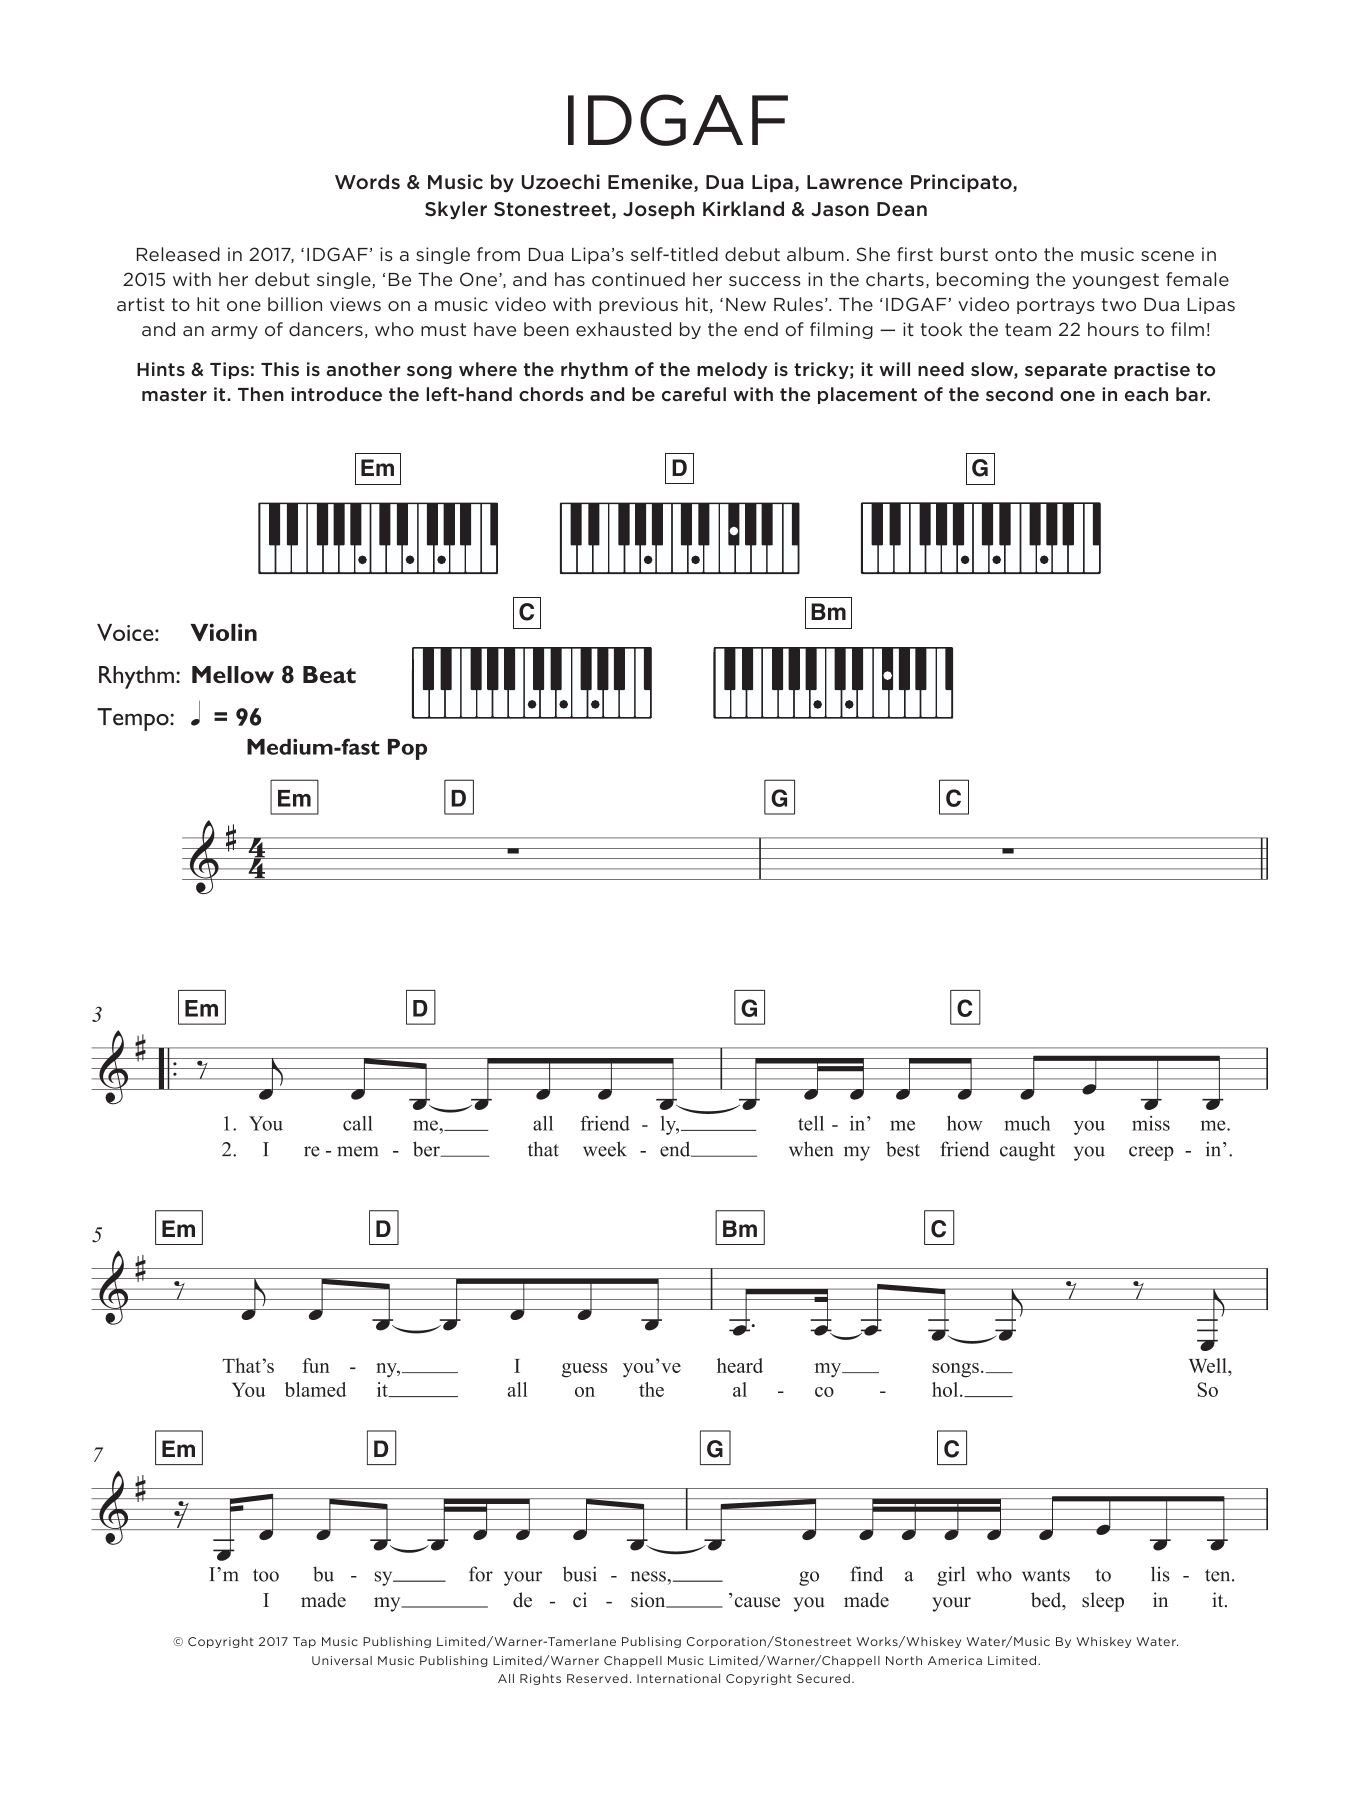 Dua Lipa IDGAF Sheet Music Notes & Chords for Piano, Vocal & Guitar Chords (Right-Hand Melody) - Download or Print PDF